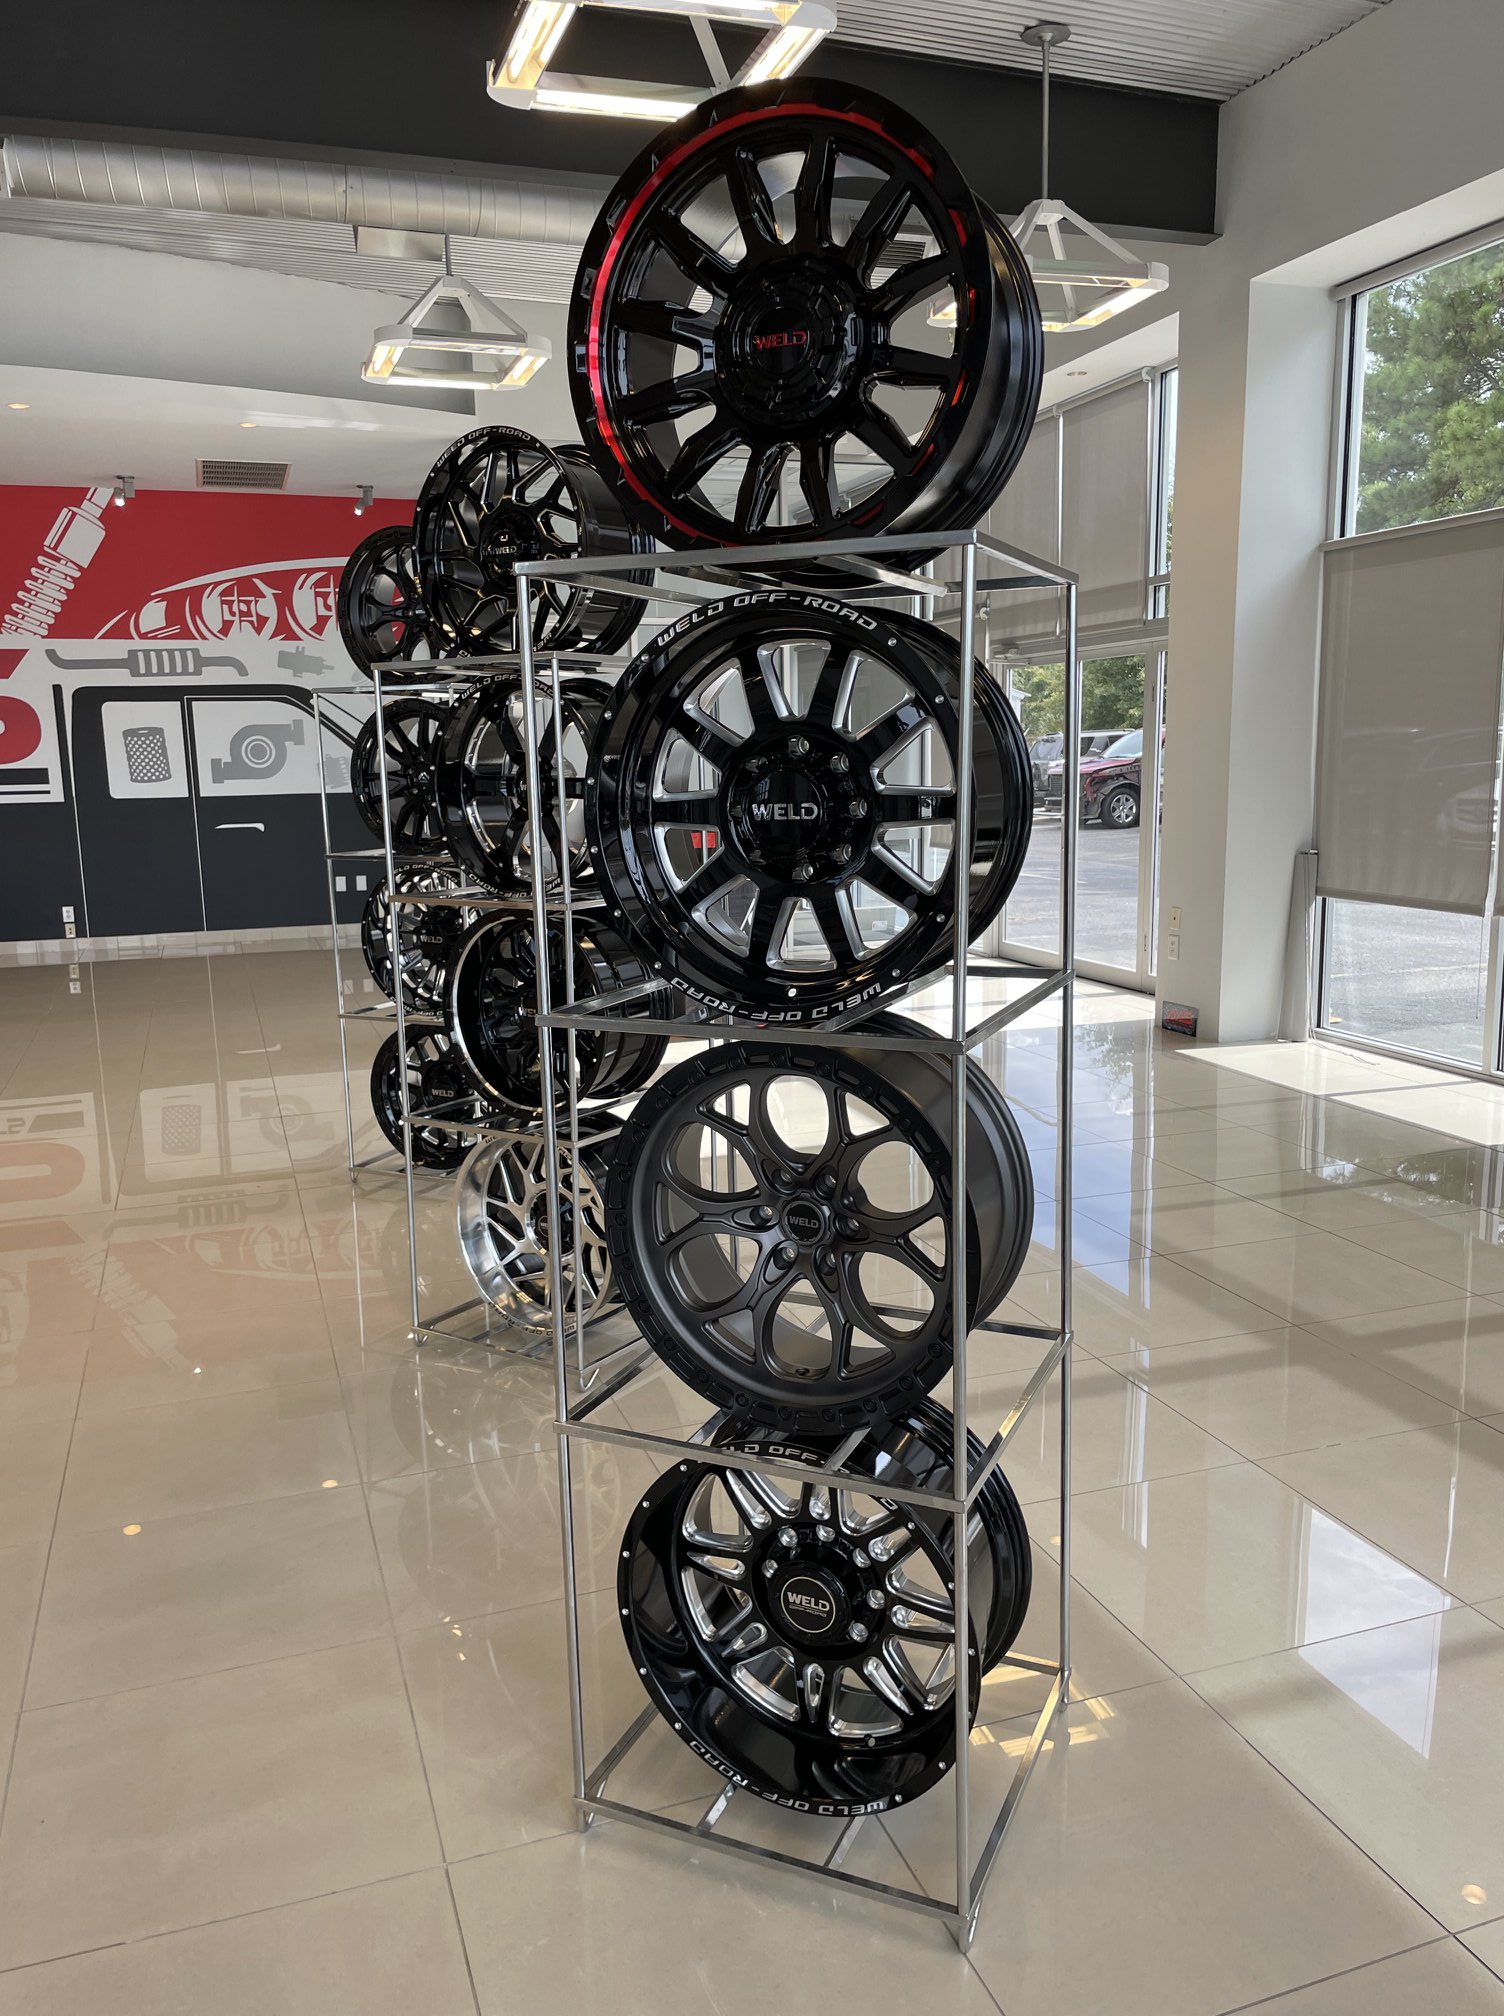 Athens Auto Sports MW Wheels on Display